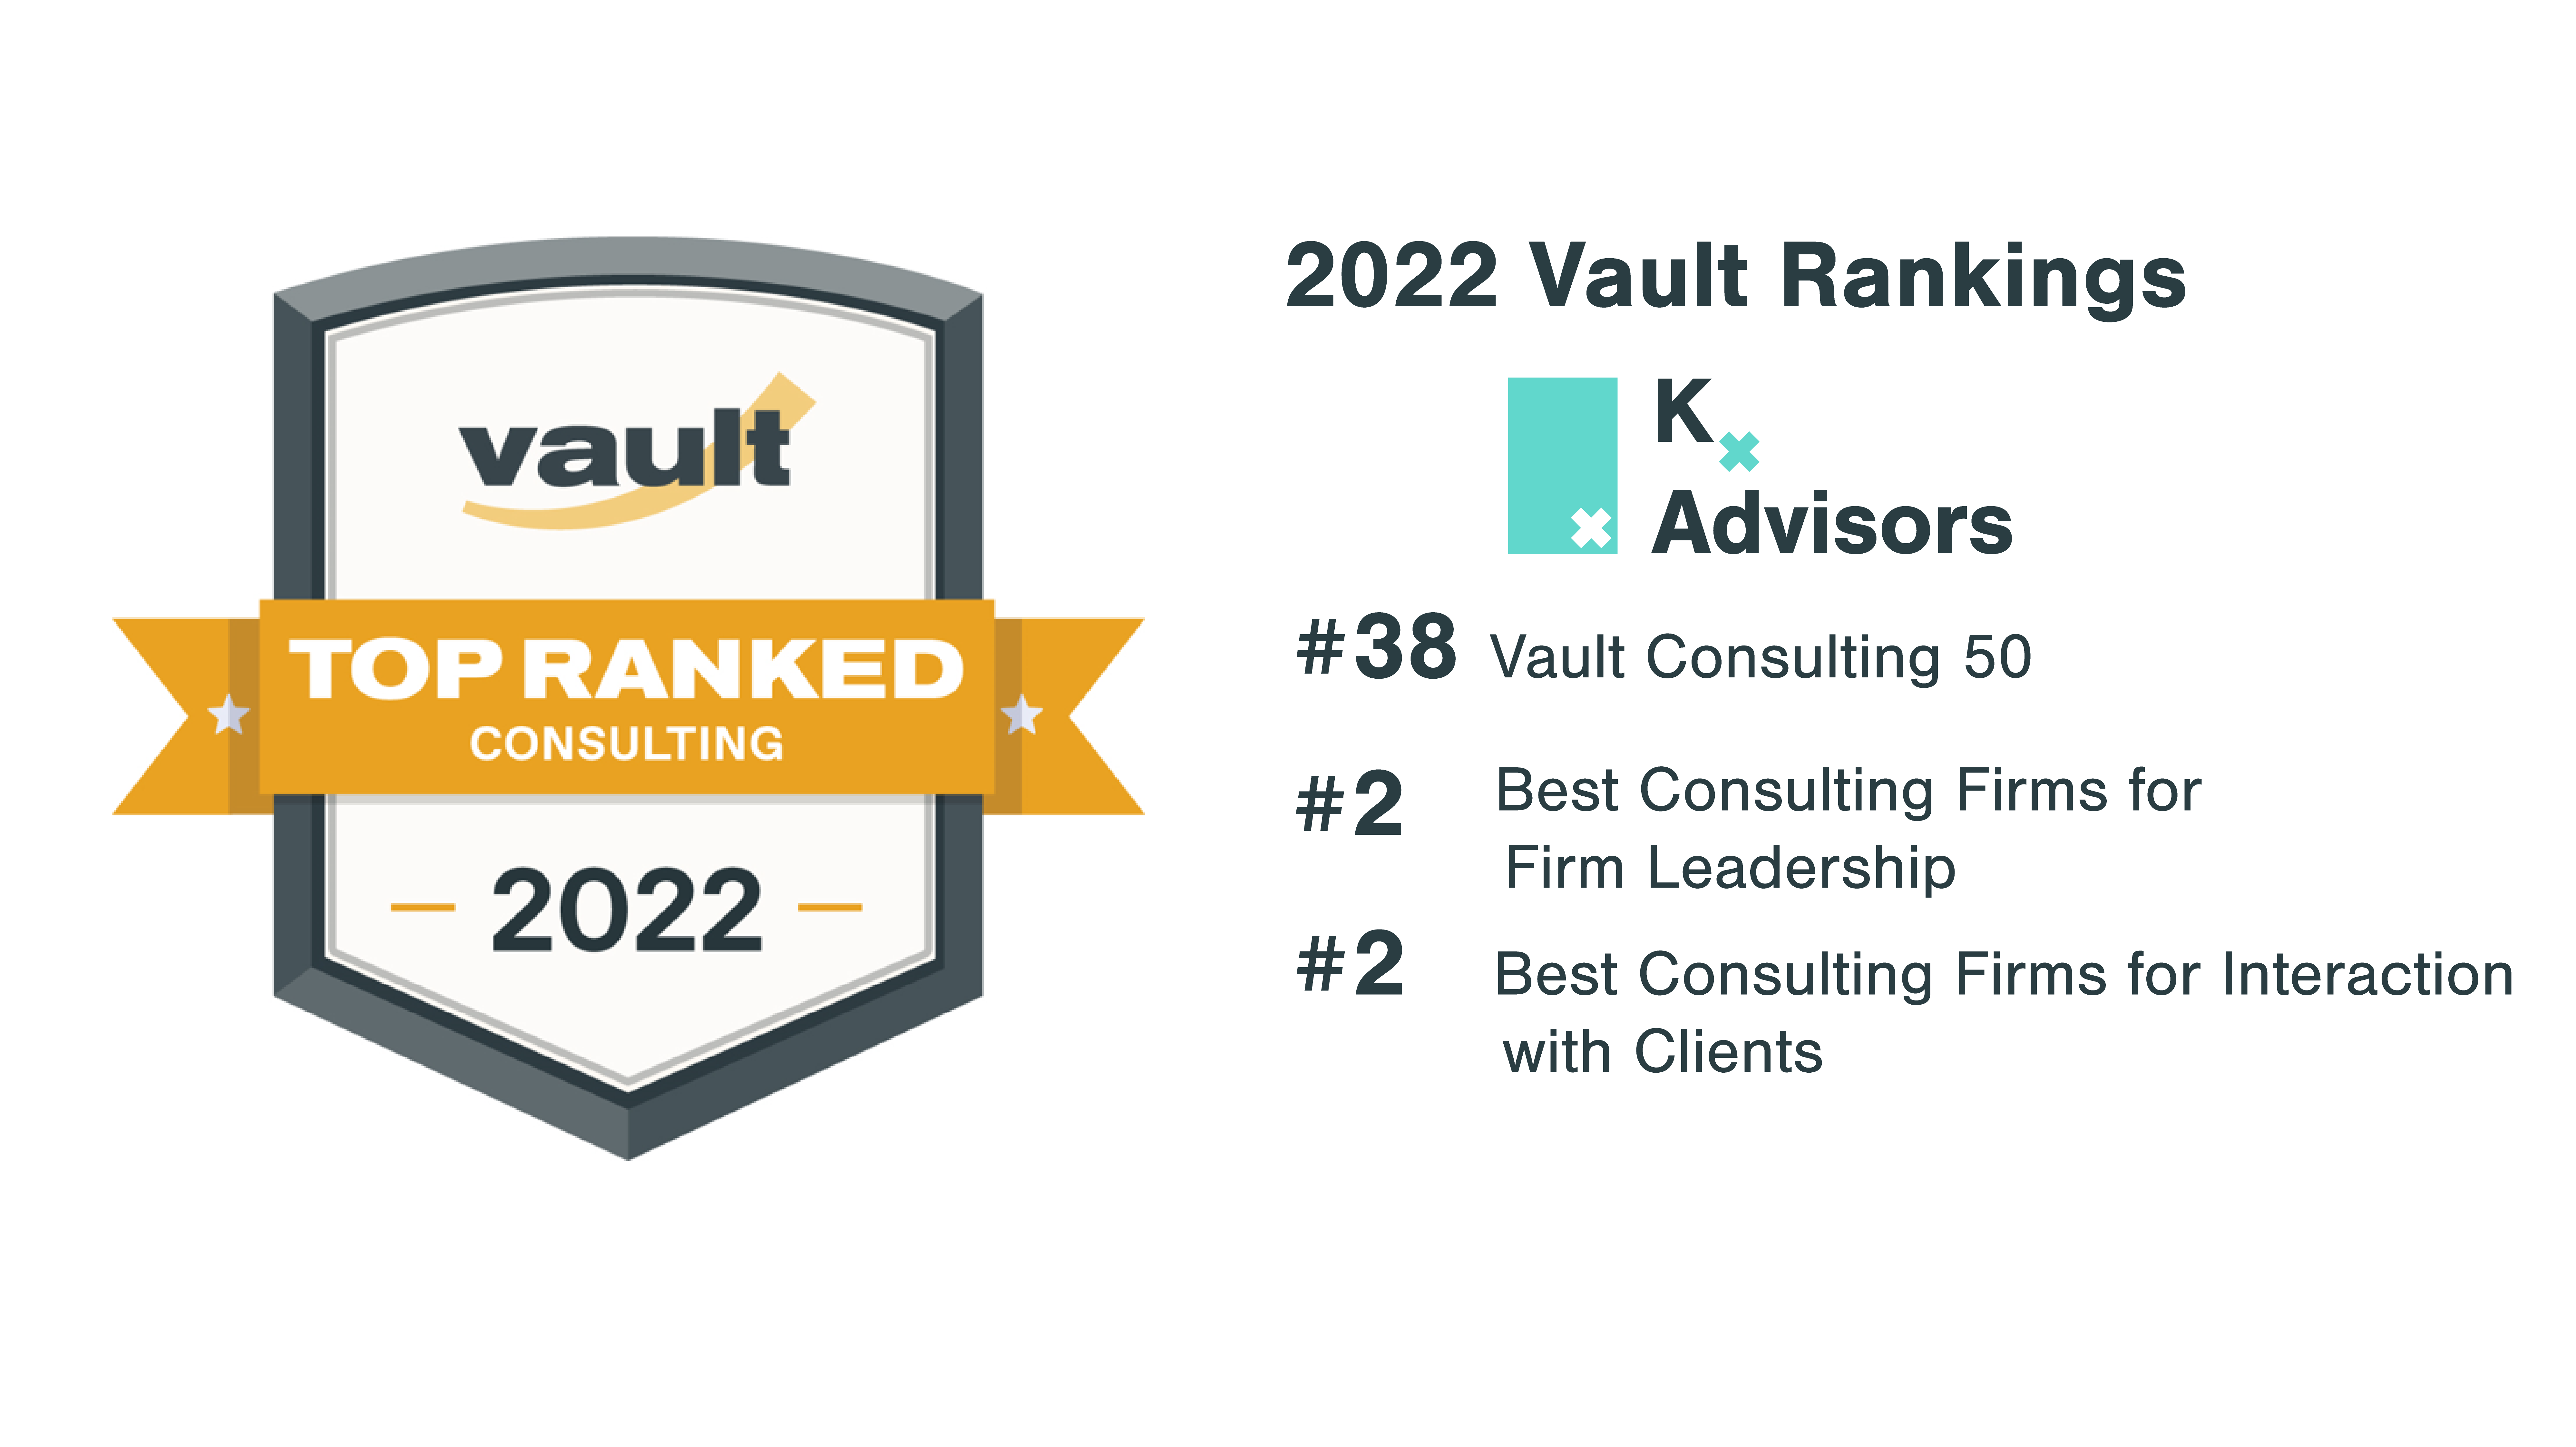 Kx Advisors Top Consulting Company rankings Vault 2022